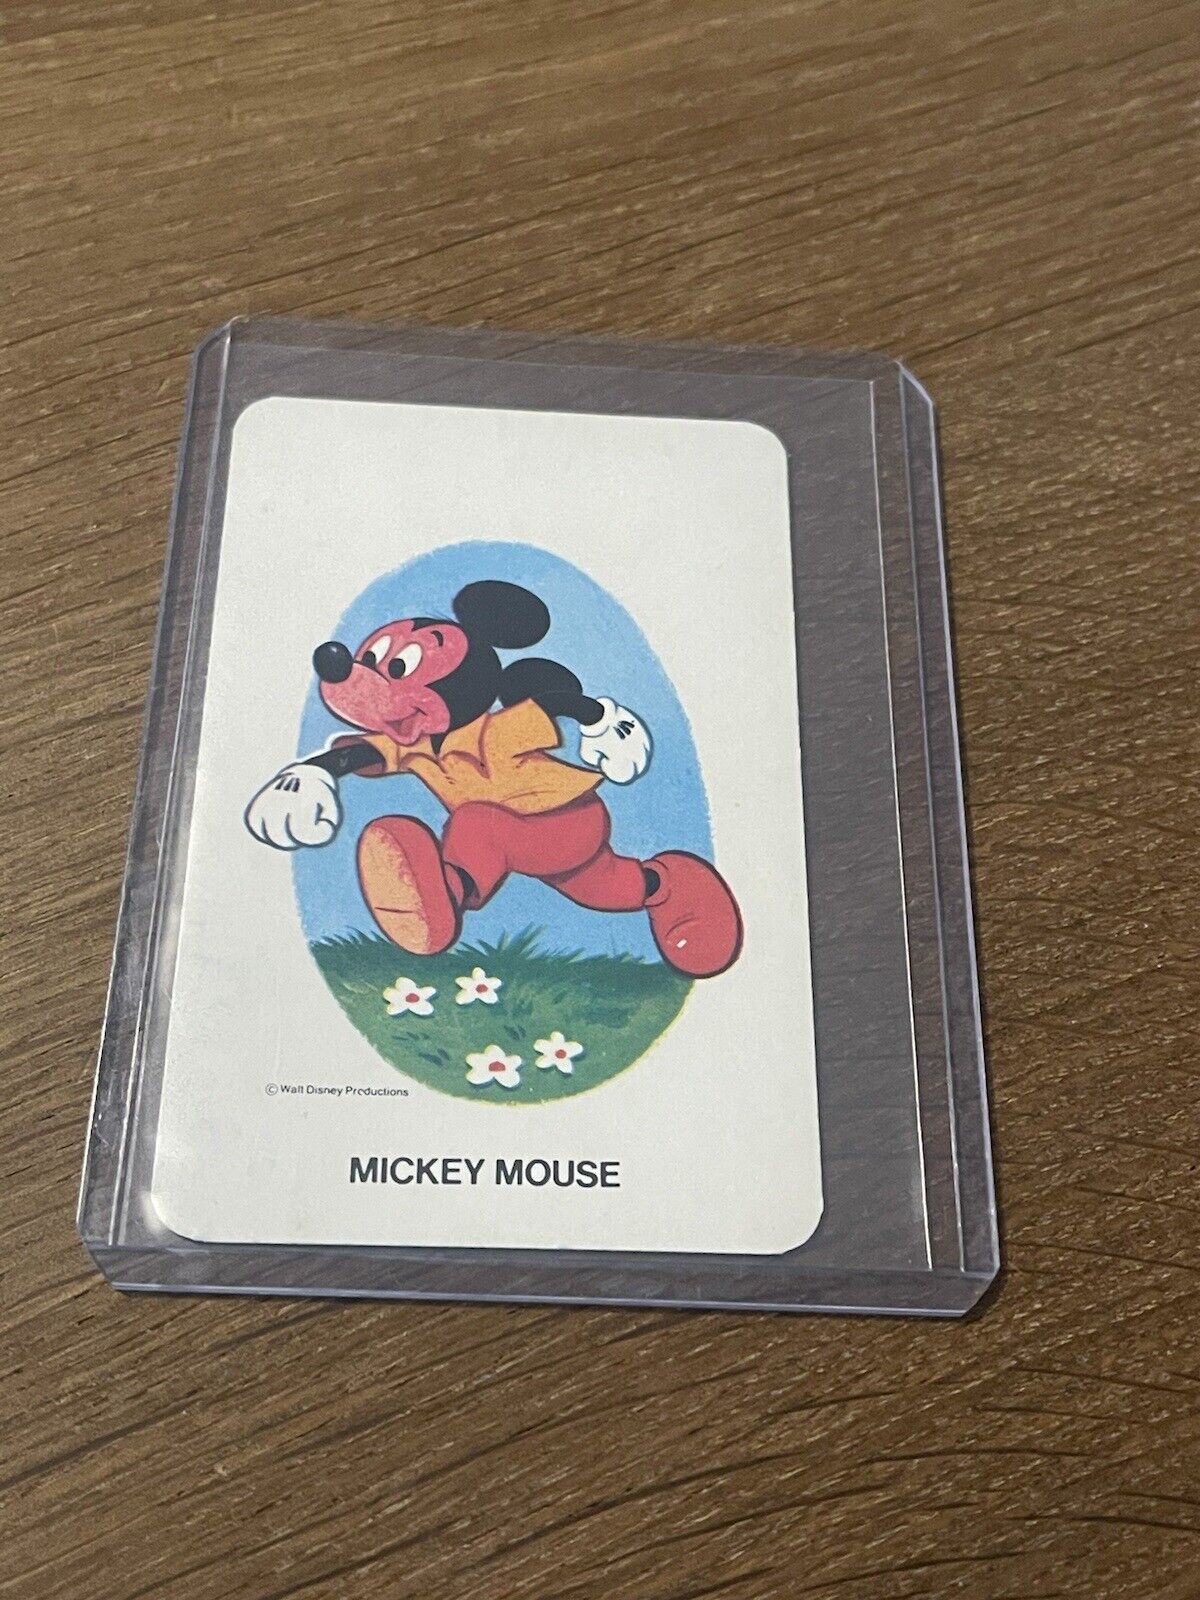 Authentic Vintage Walt Disney Productions Snap Mickey Mouse Card RARE DISNEYANA